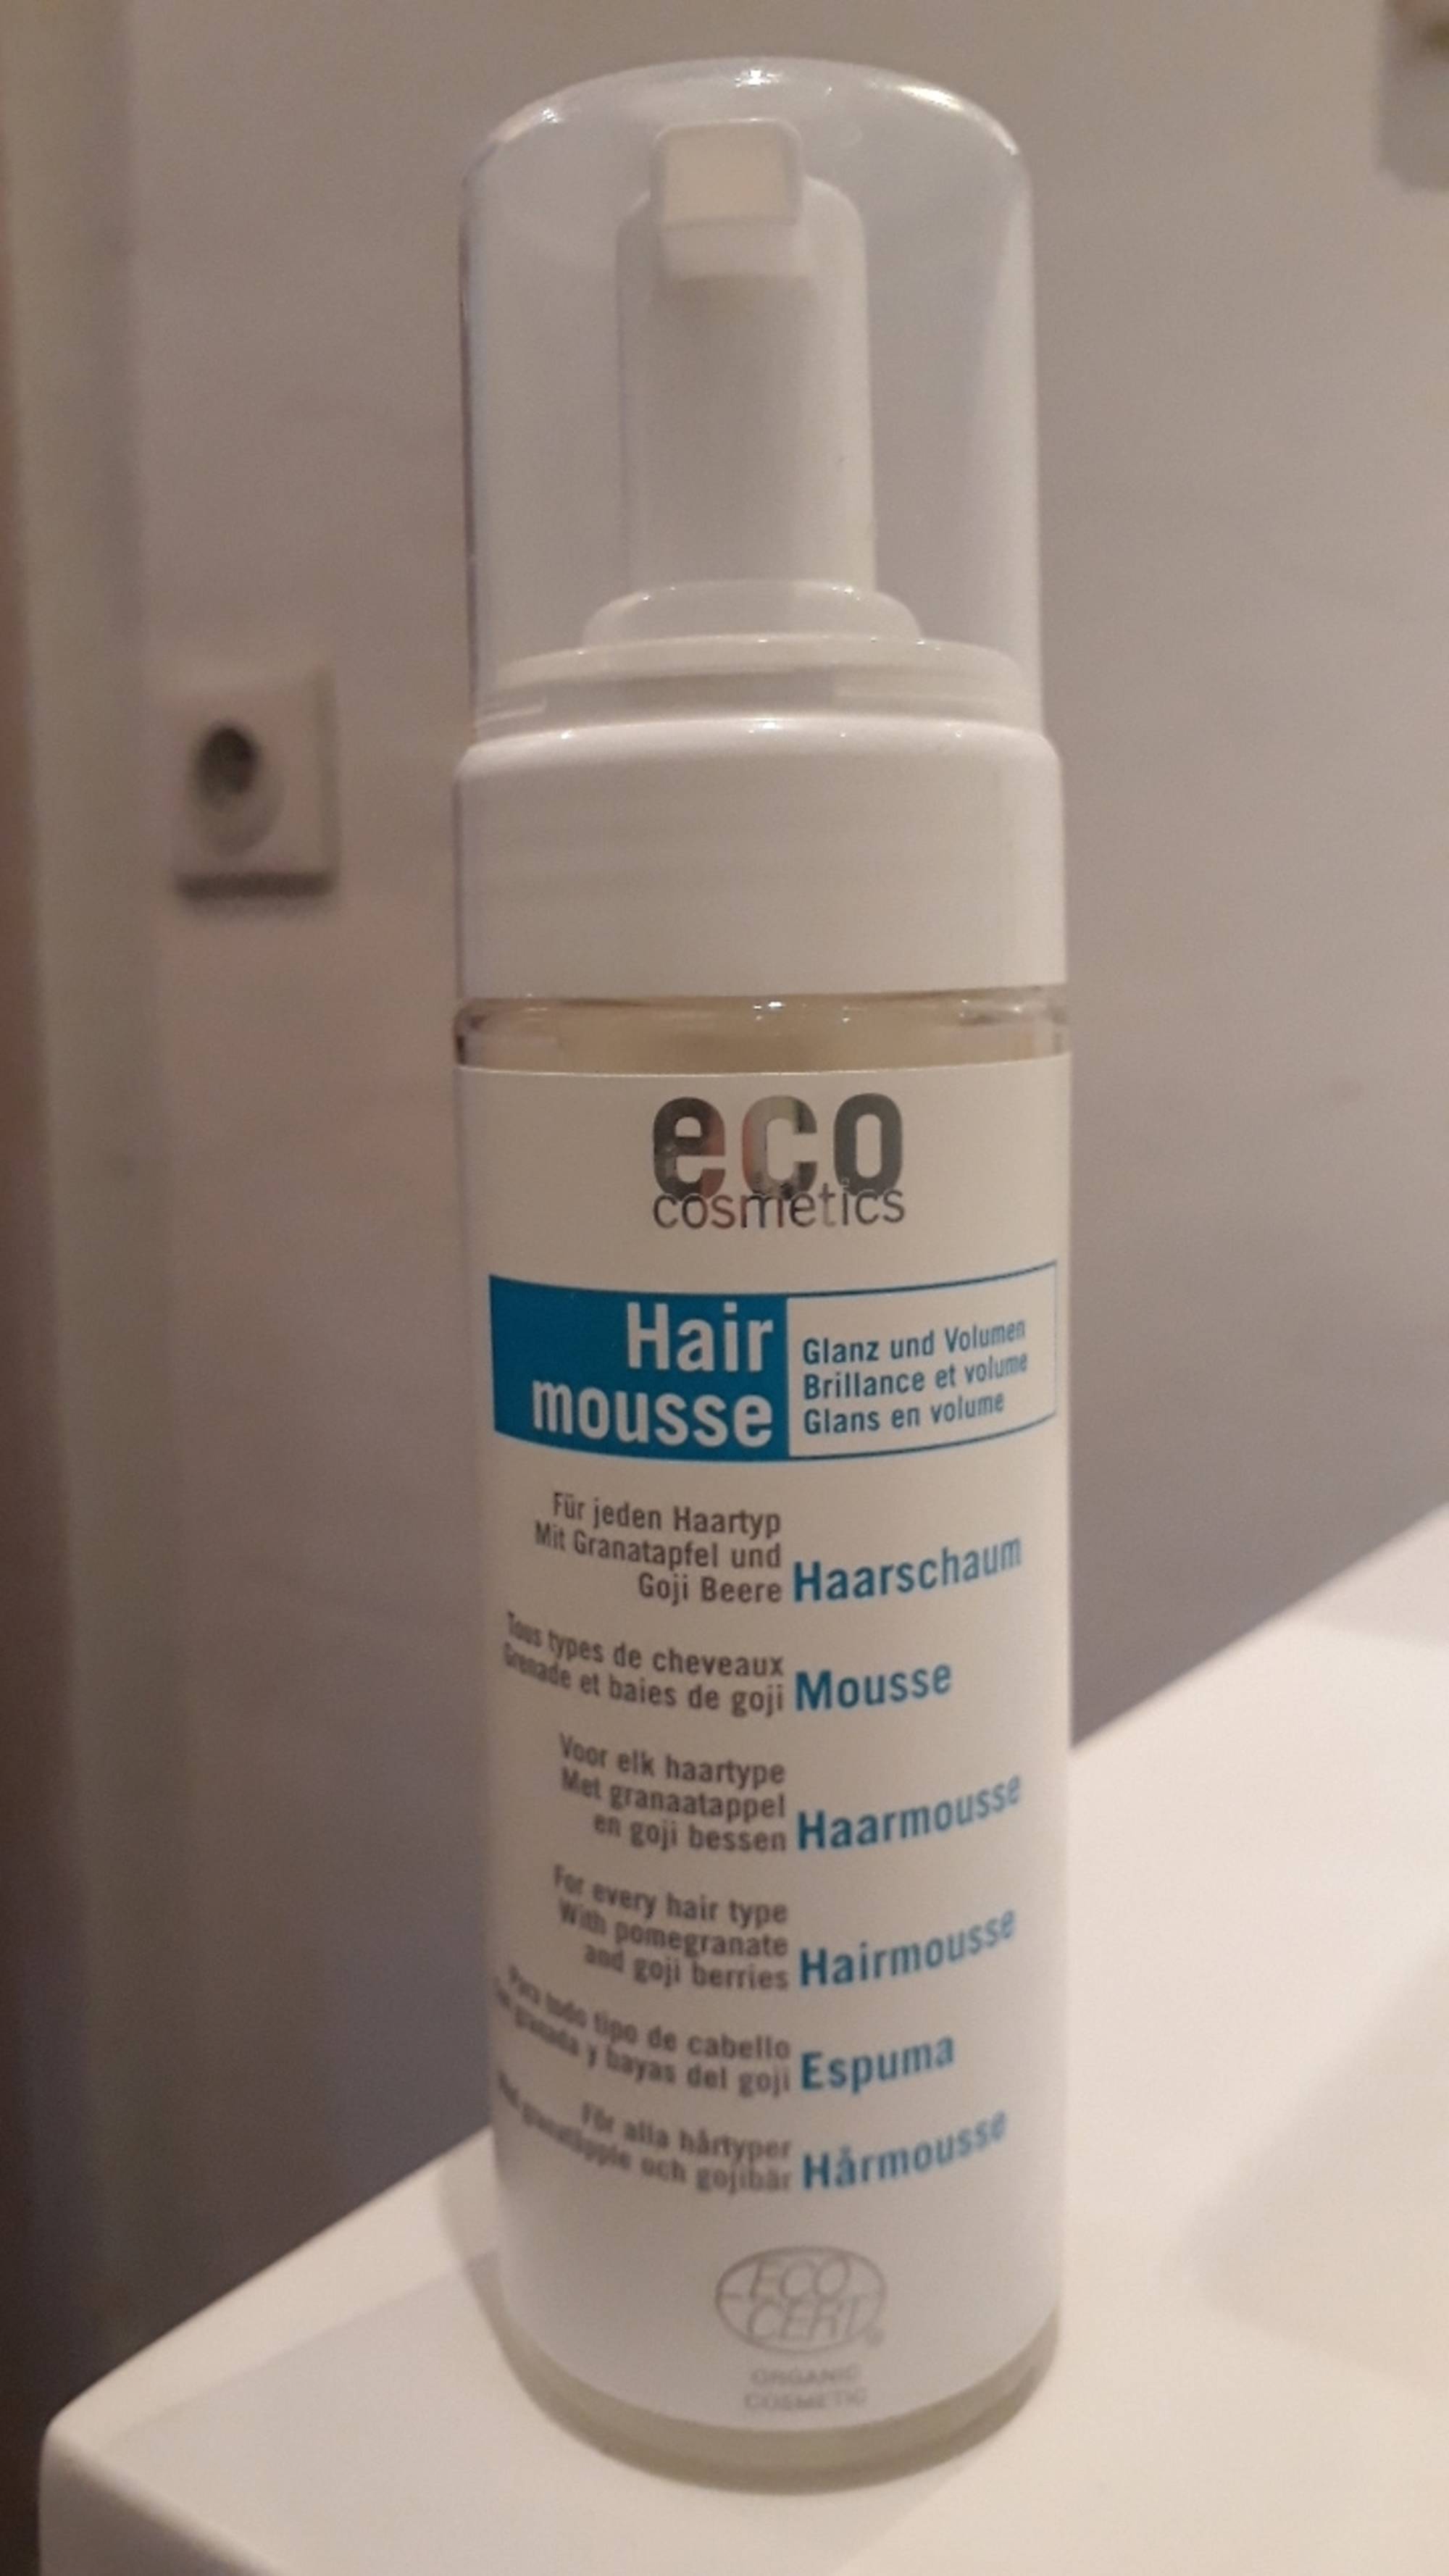 ECO COSMETICS - Hair mousse